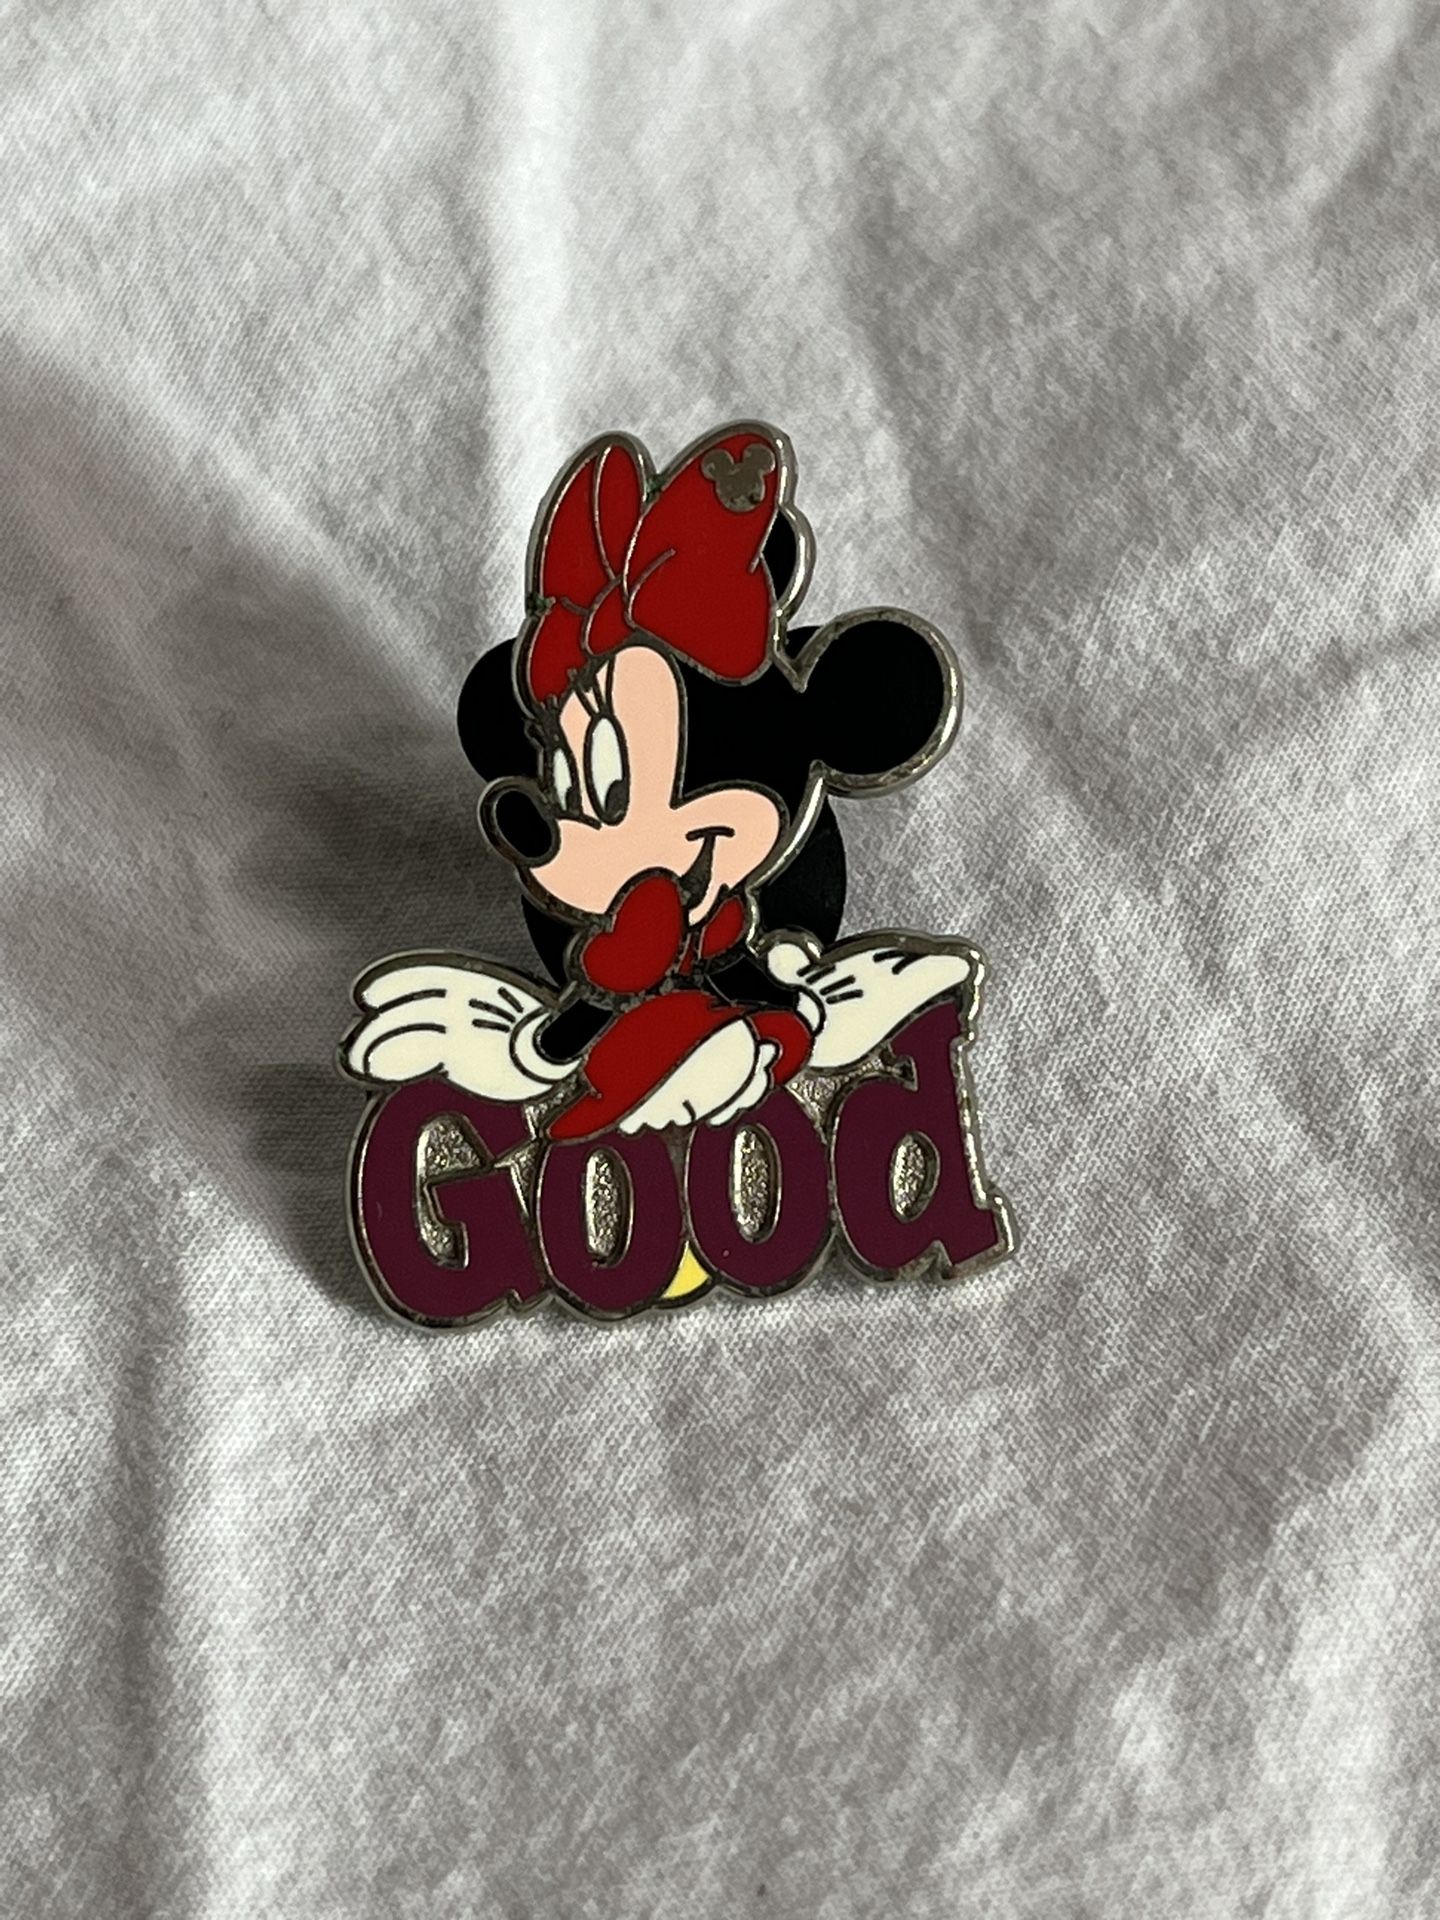 Disney Hidden Mickey Pin